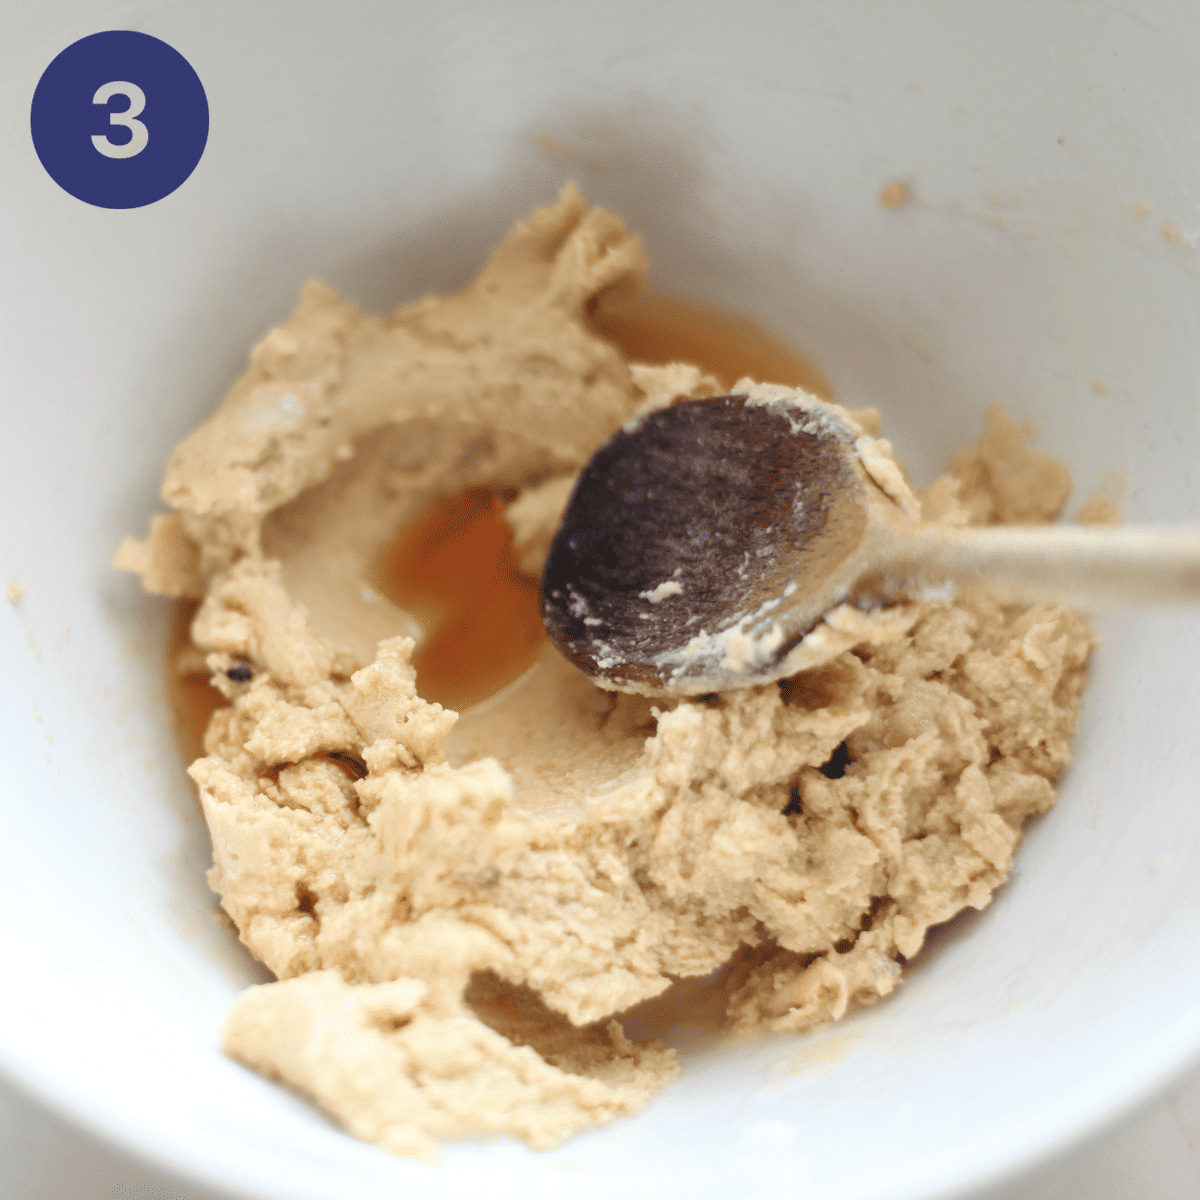 Adding vanilla extract to cookie dough